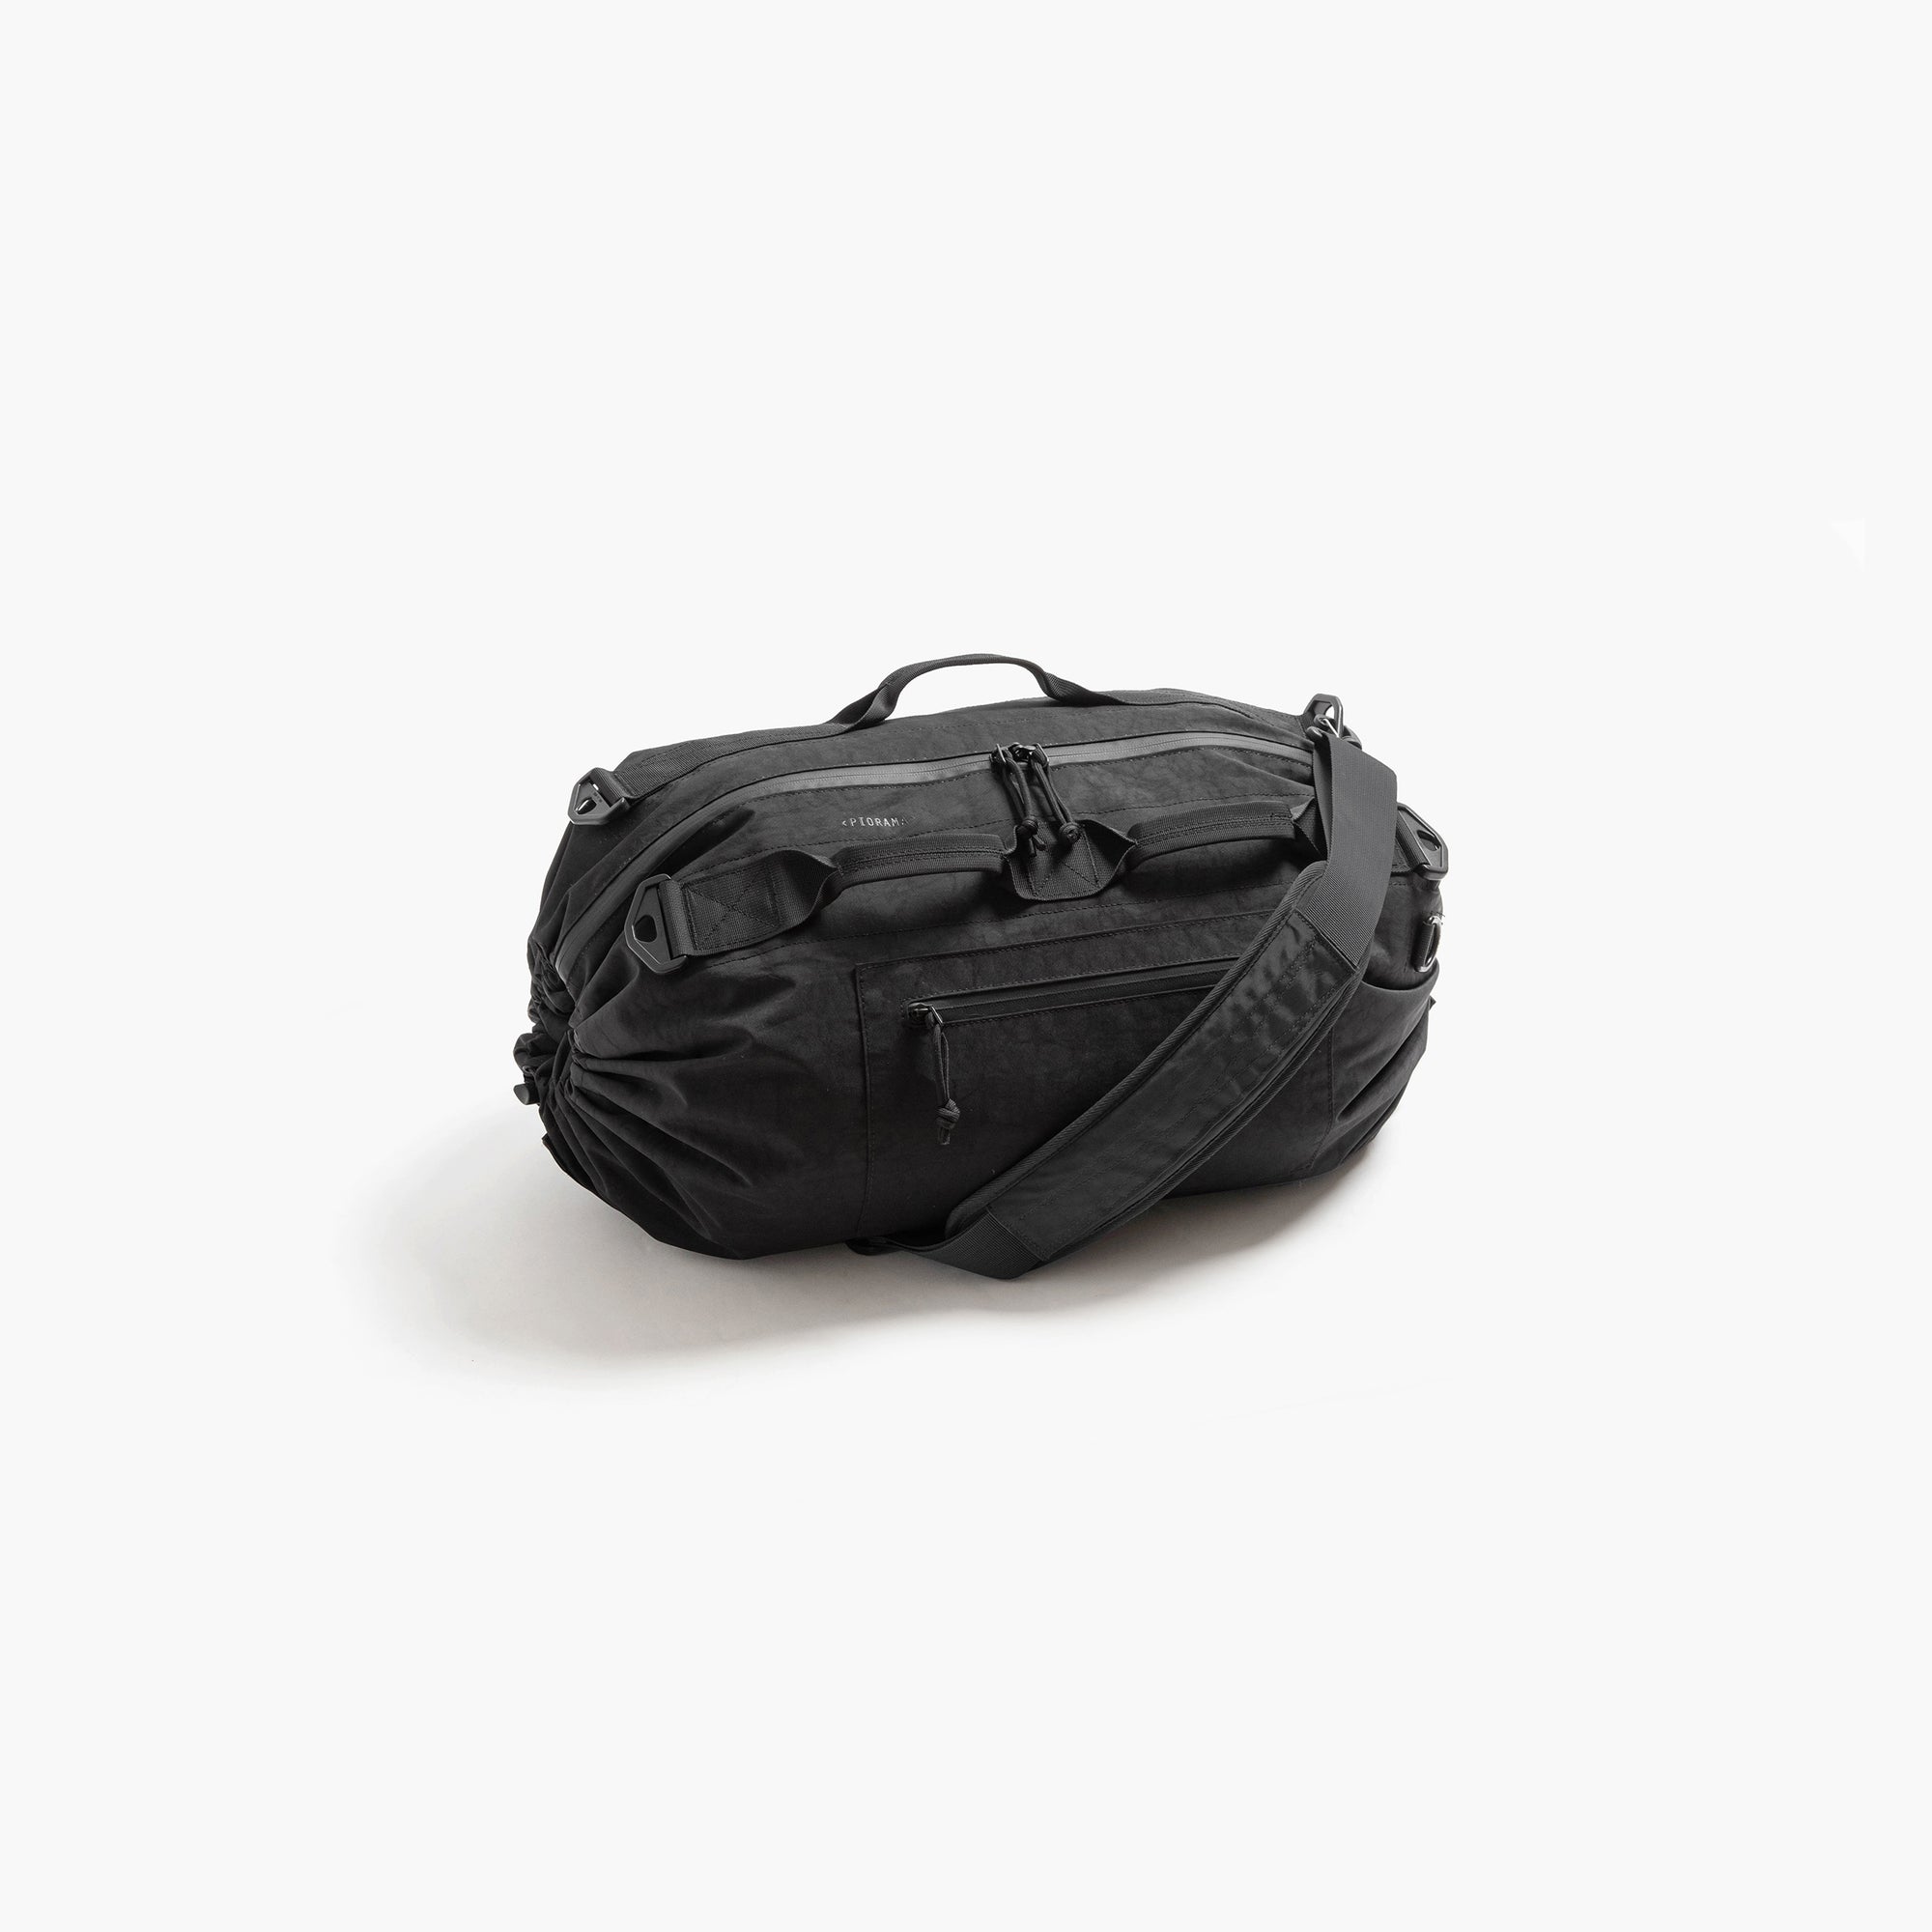 Adjustable Bag - A10 (gen3)